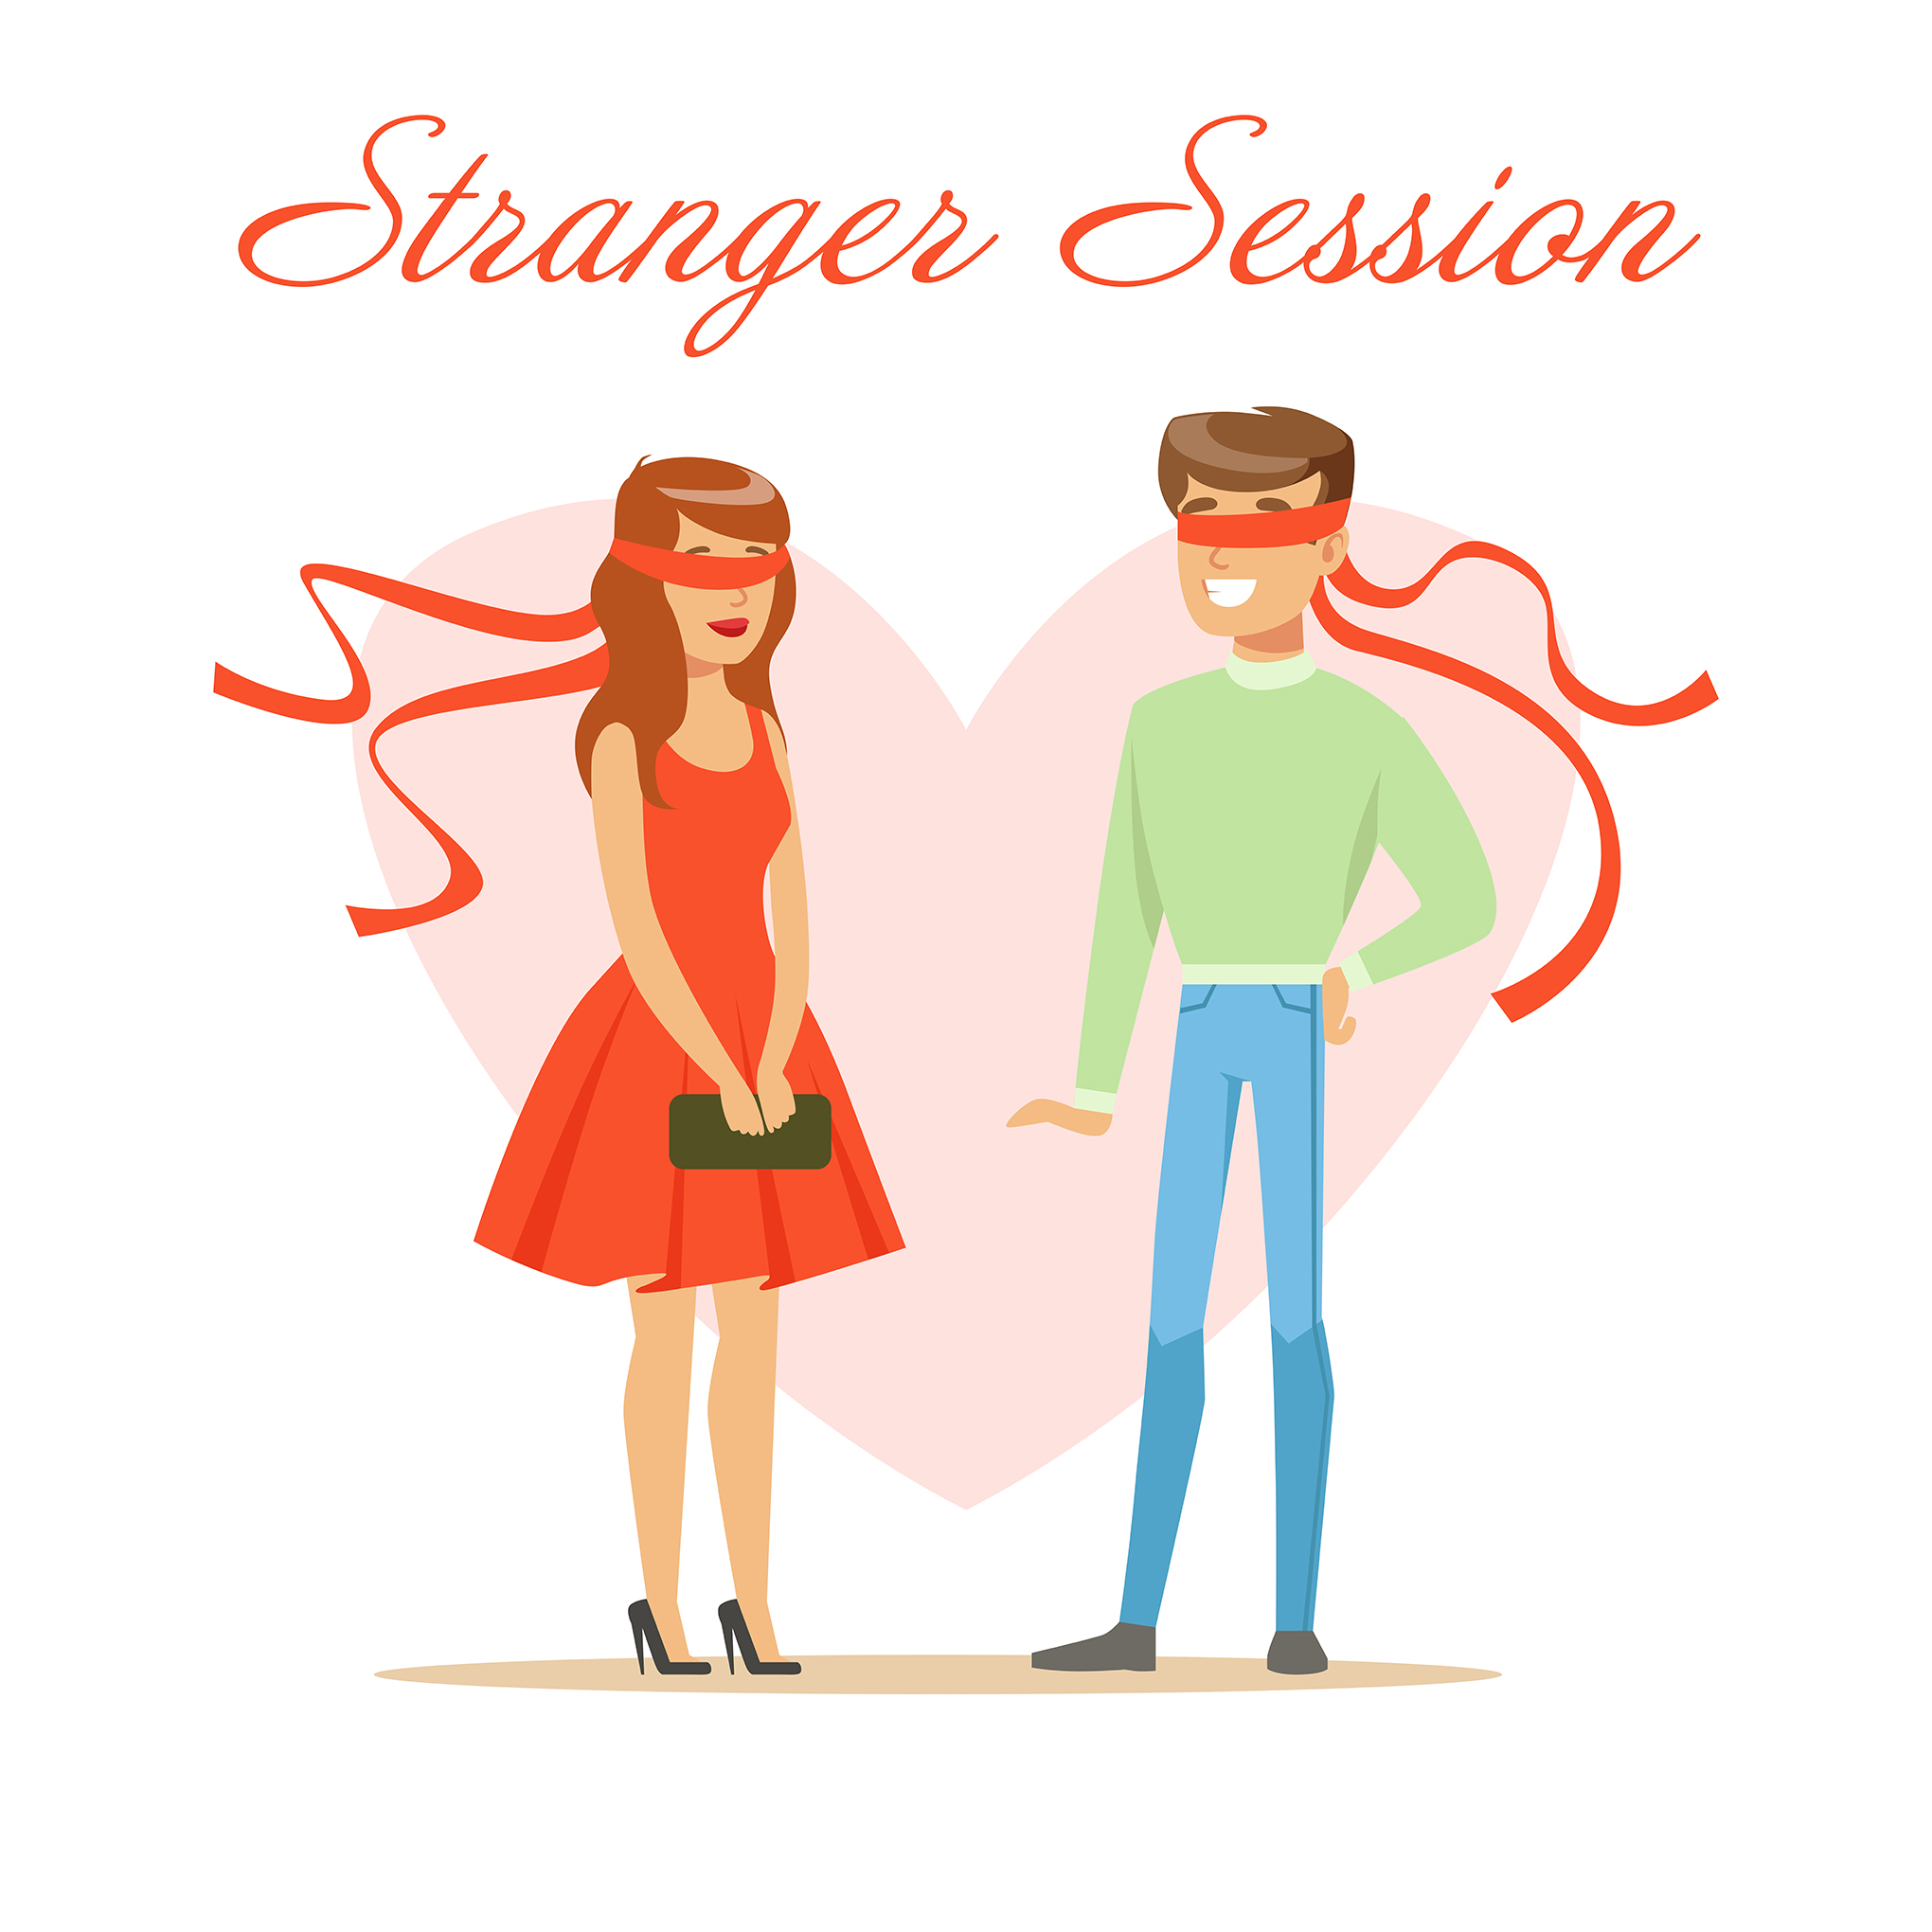 stranger-session-couple-blindfolded-blacksburg-virginia-photography-christiansburg